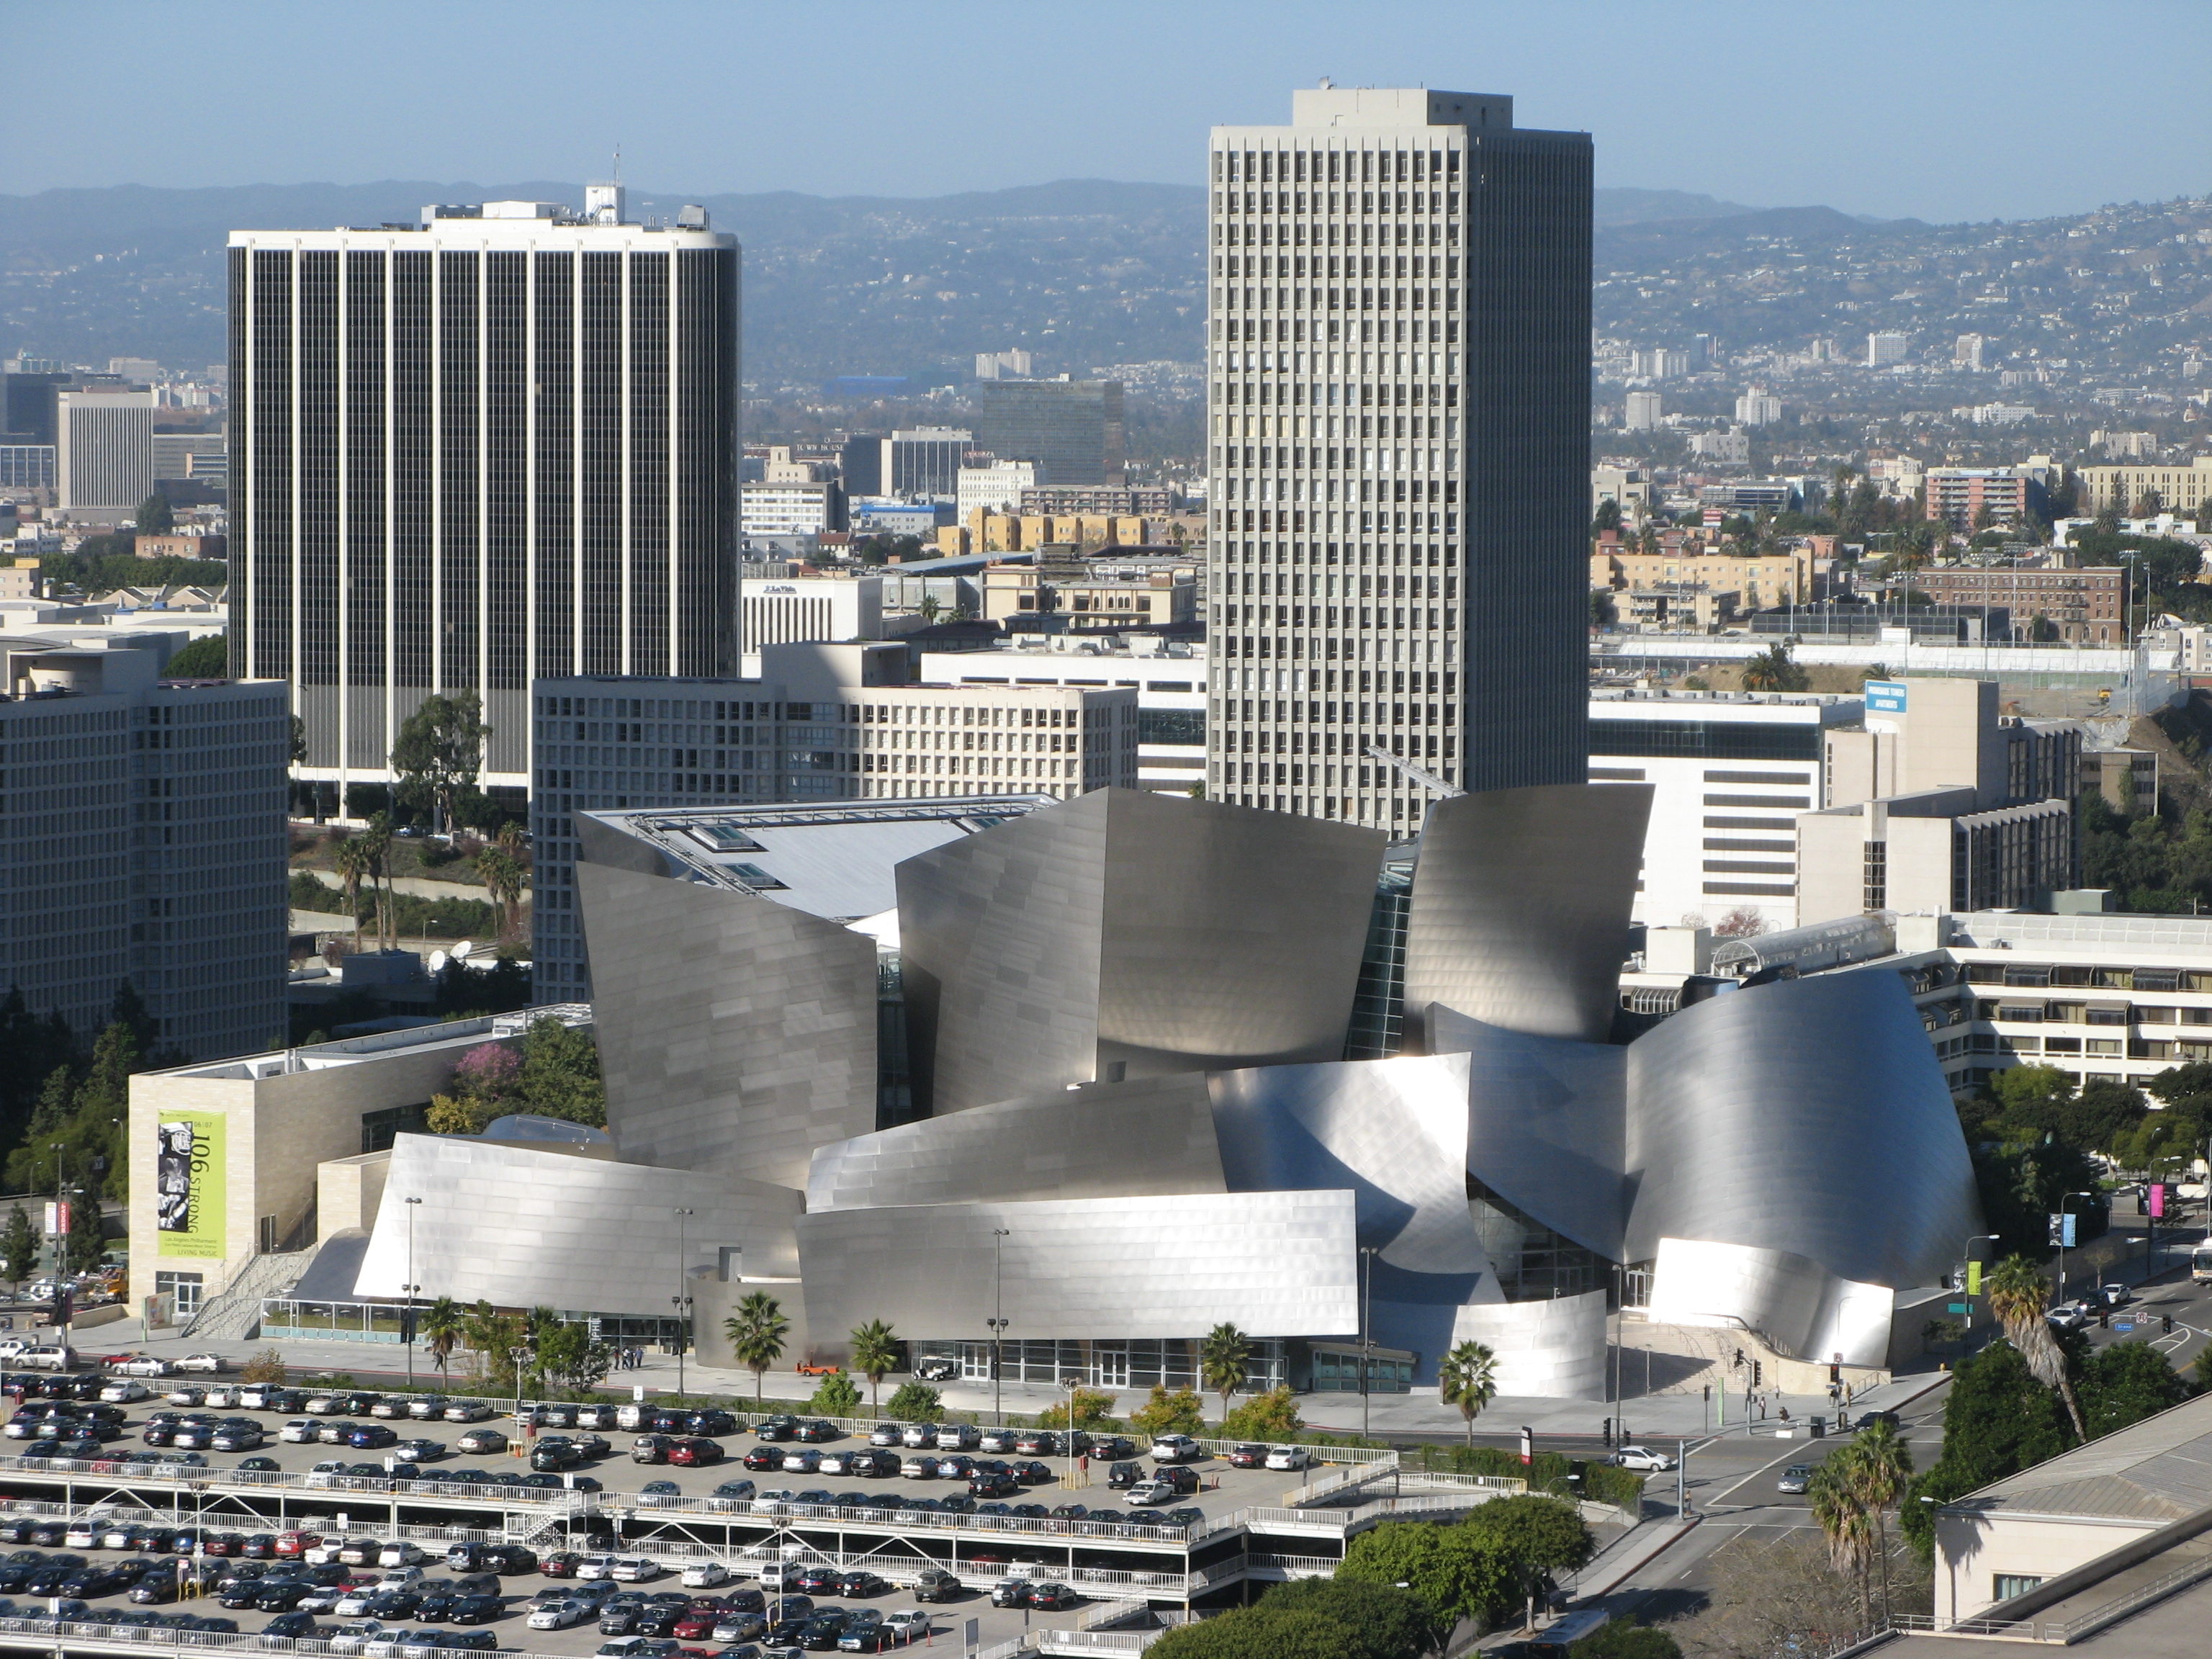 File:Walt Disney Concert Hall and surrounding area.jpg - Wikimedia ...